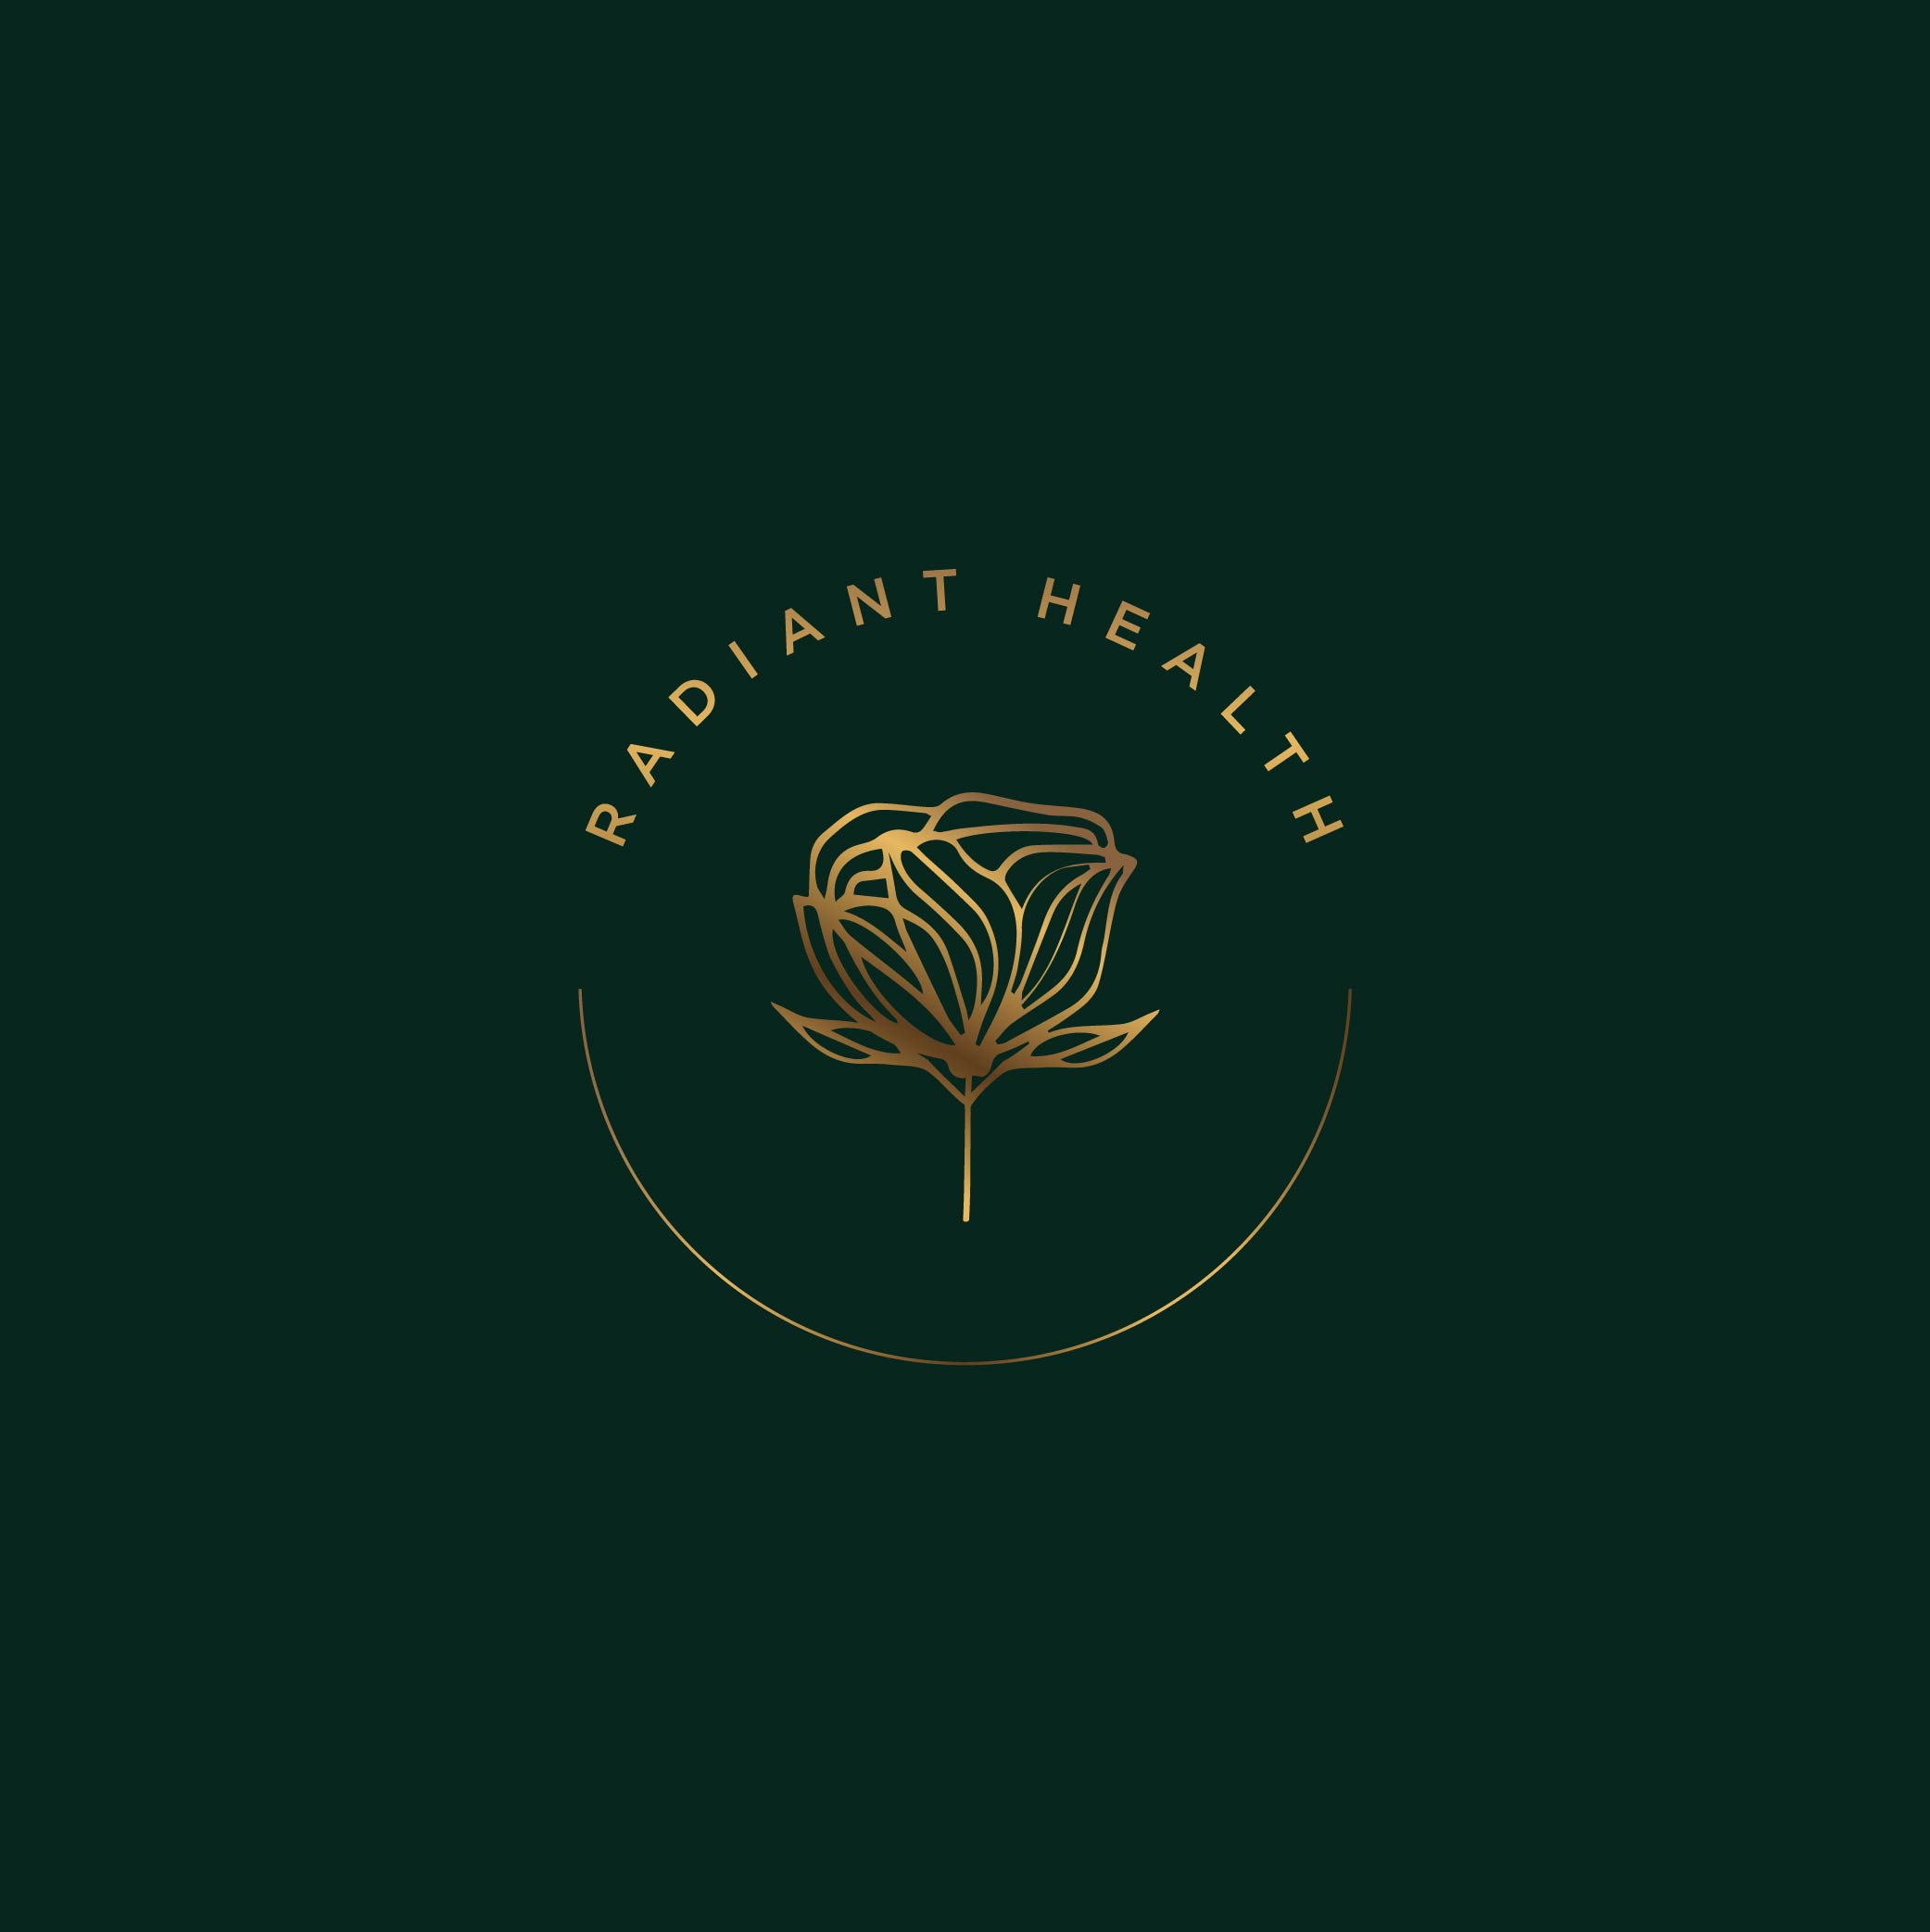 Radiant health logo